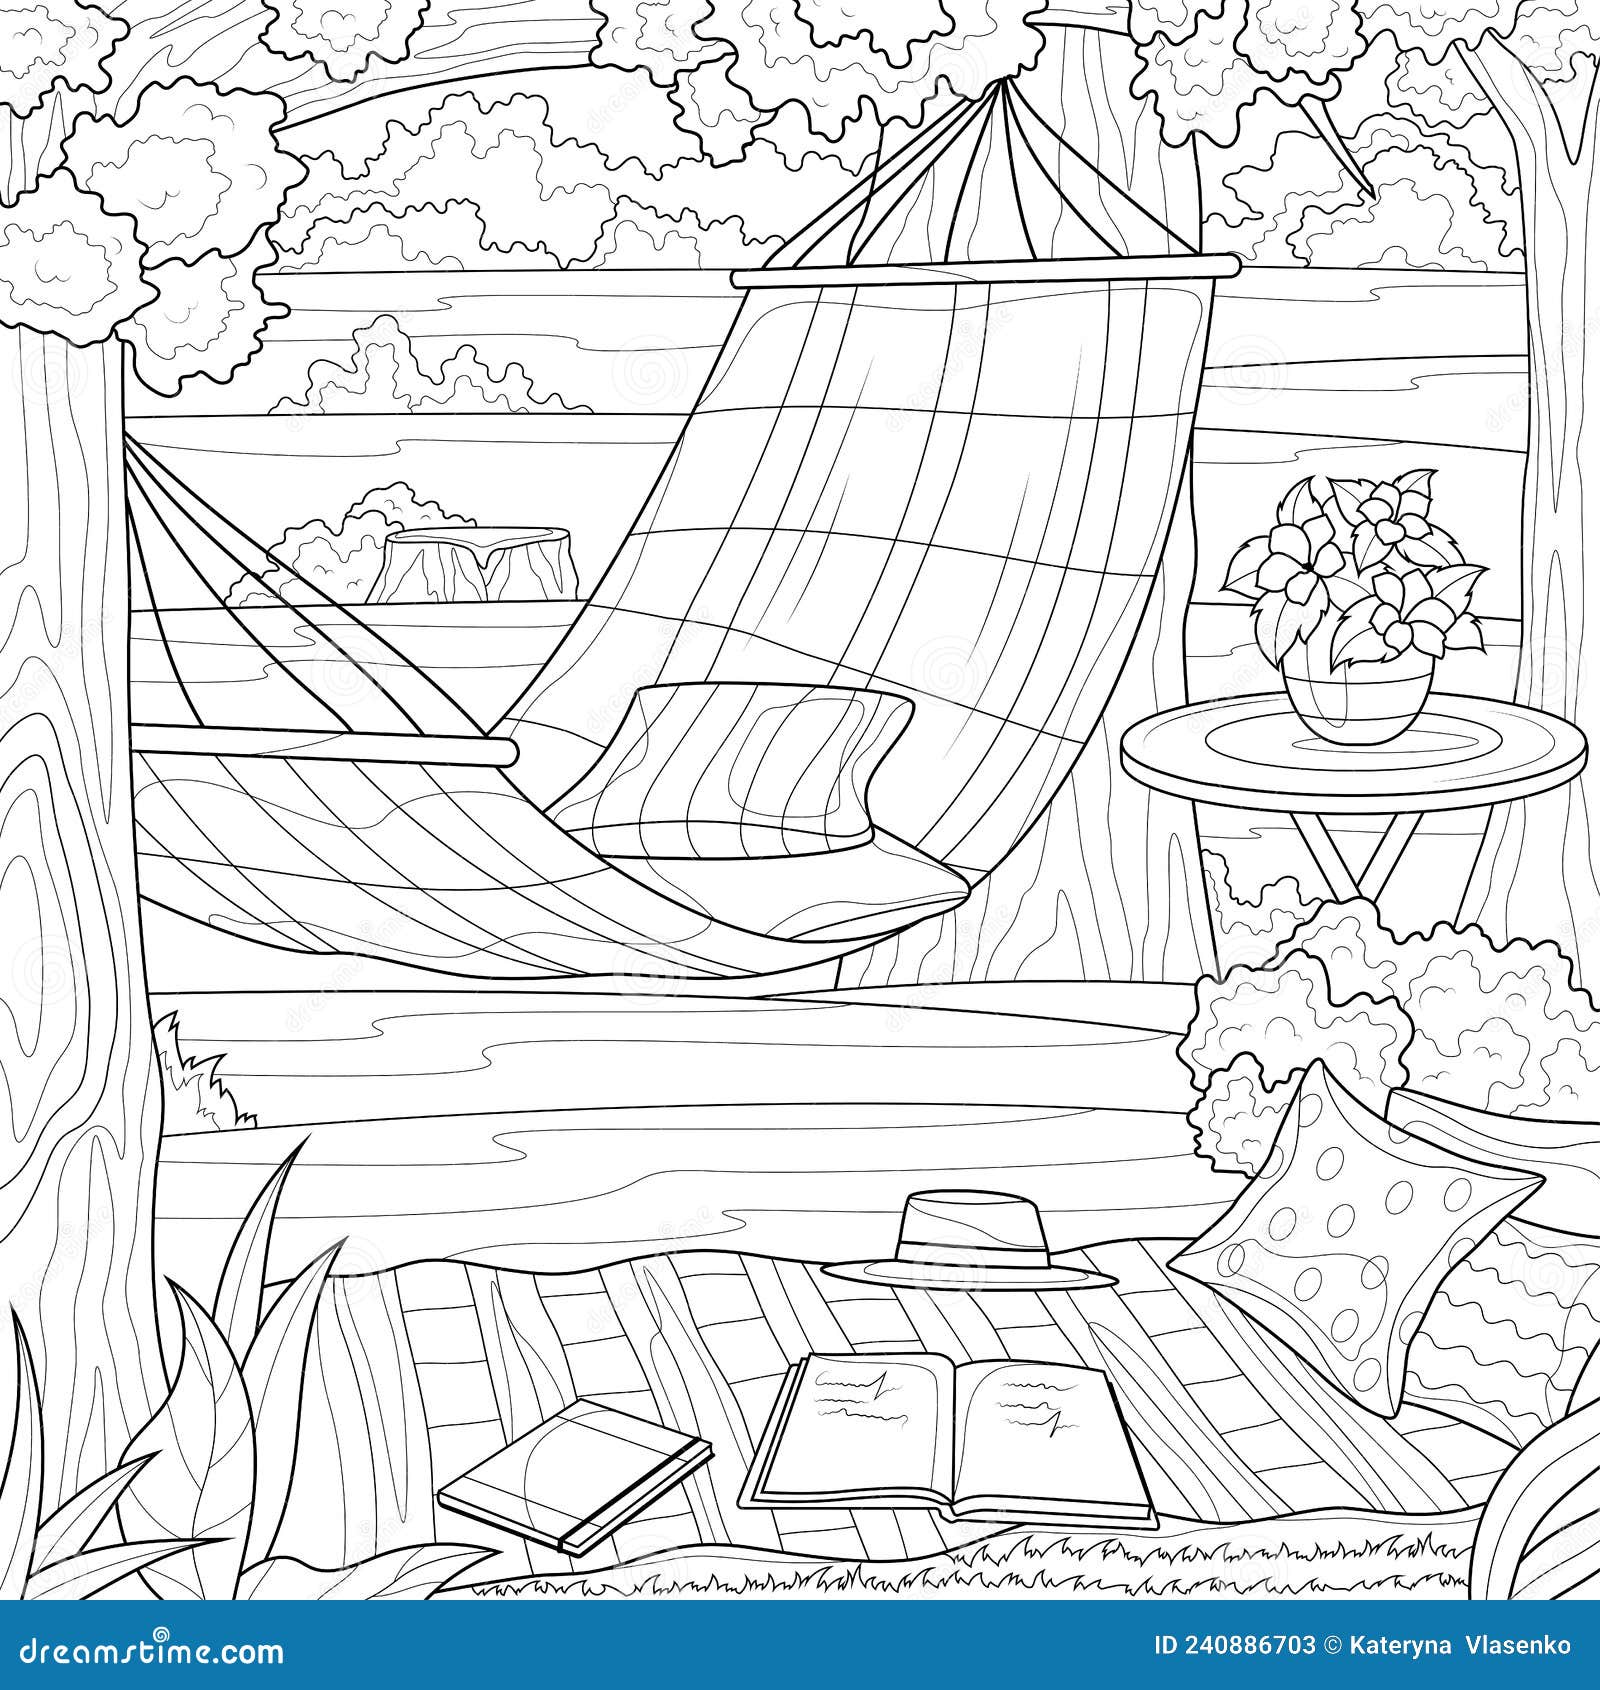 Hammock coloring stock illustrations â hammock coloring stock illustrations vectors clipart